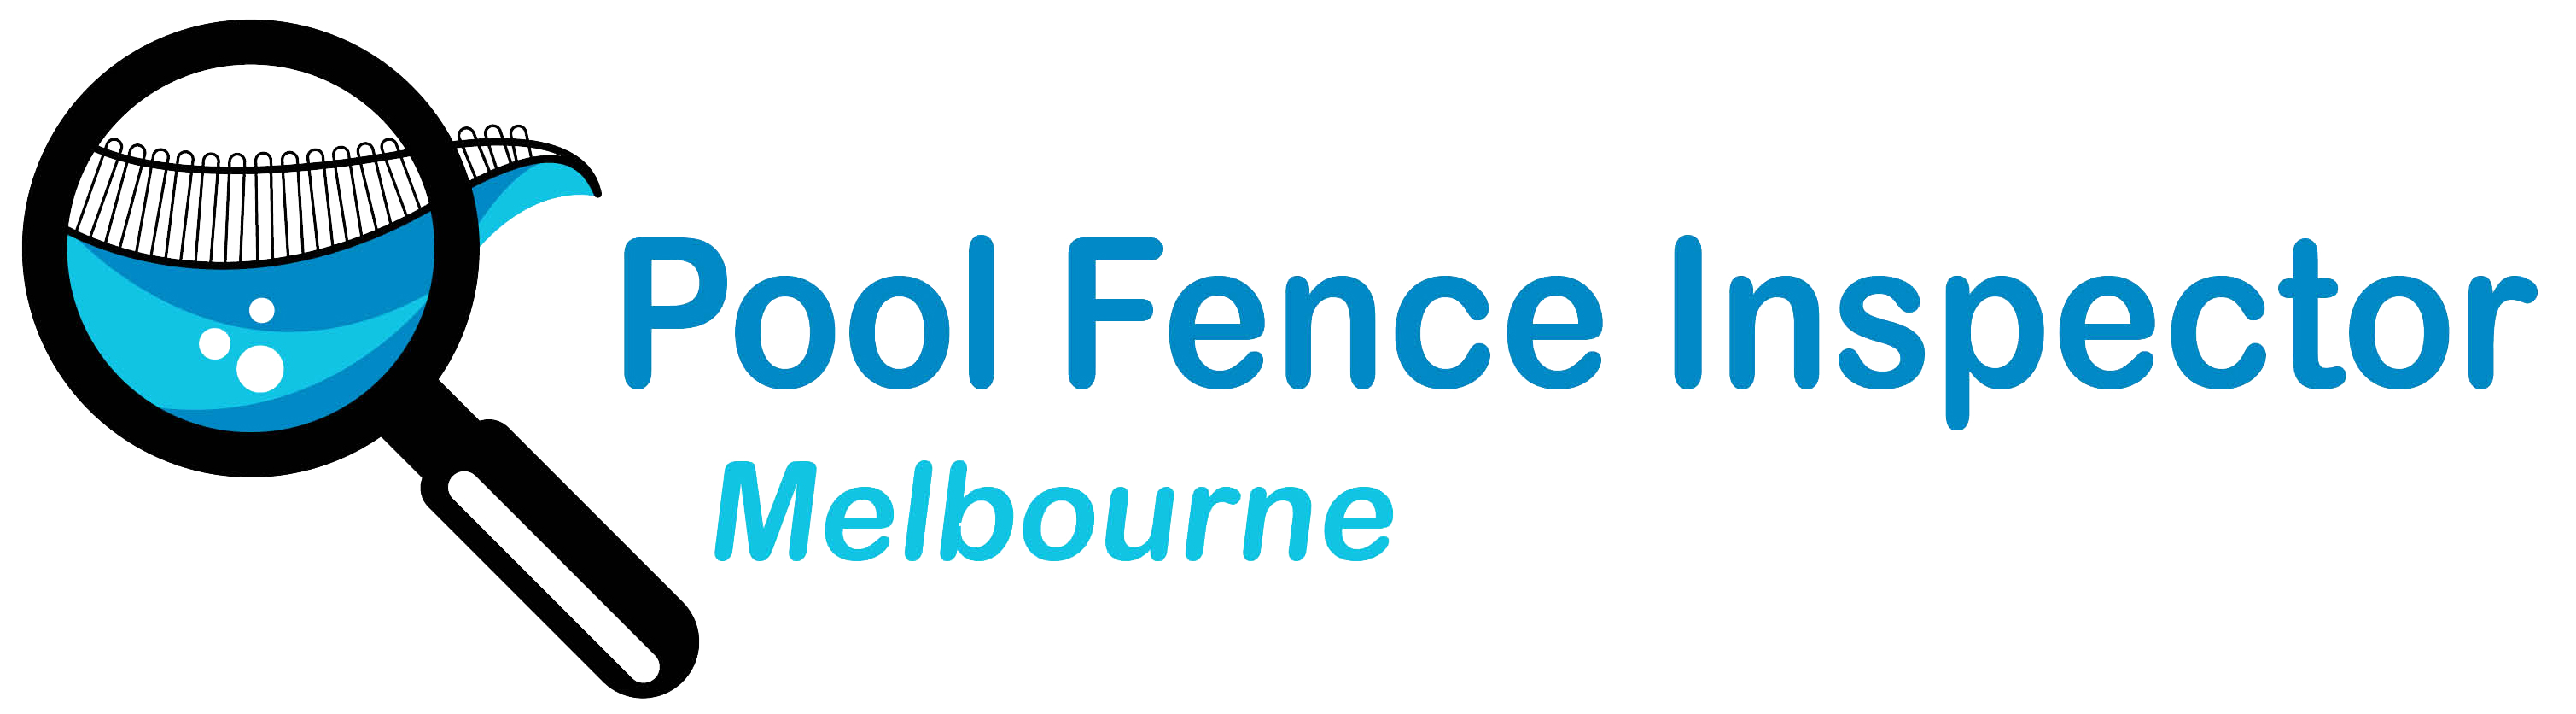 Pool Fence Inspector Melbourne